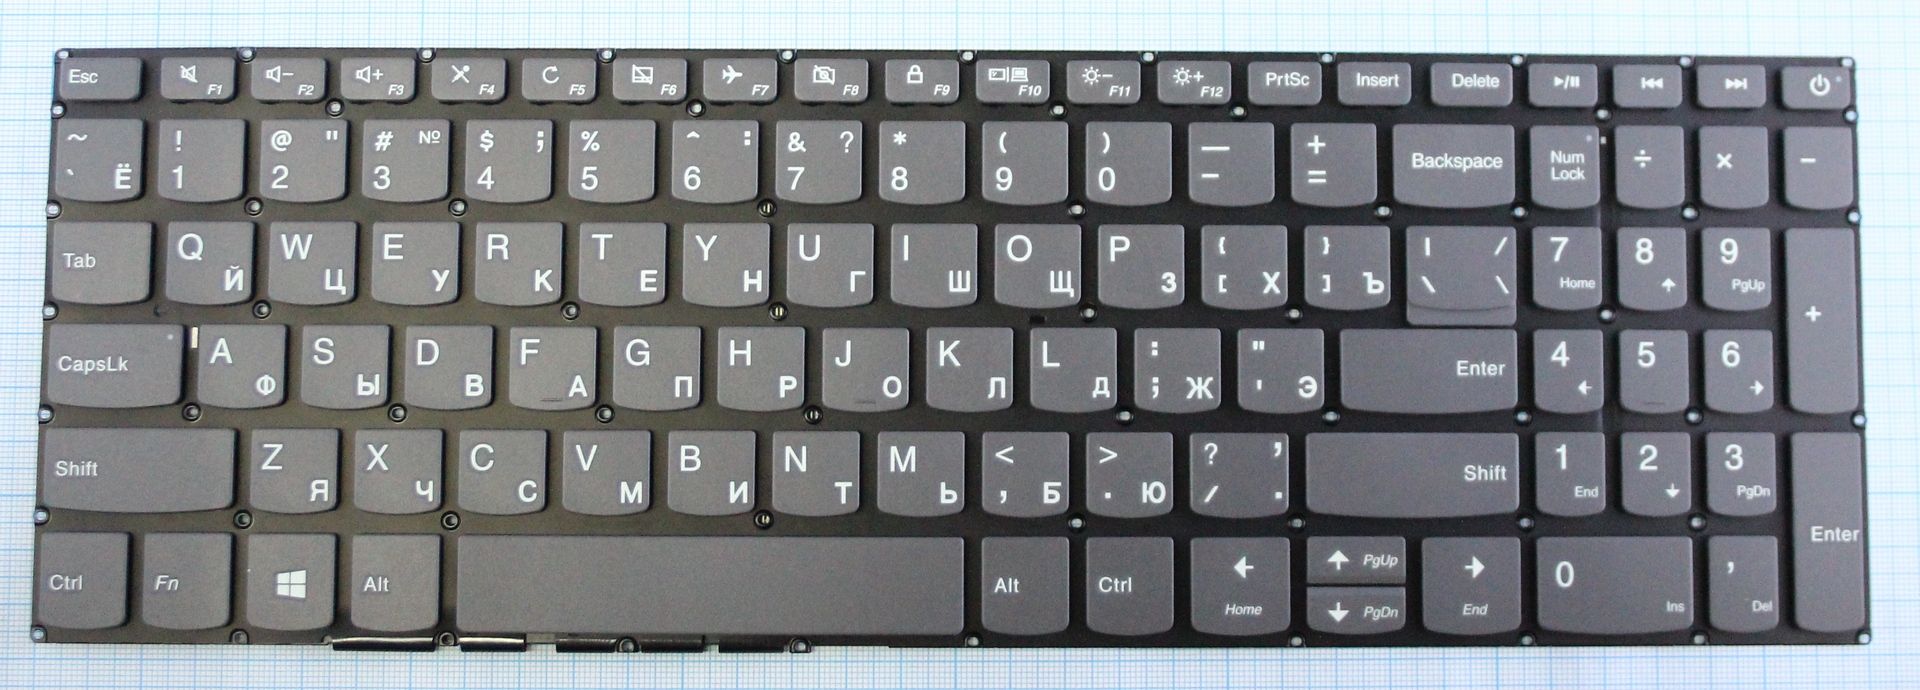 картинки клавиатуры компьютера русская